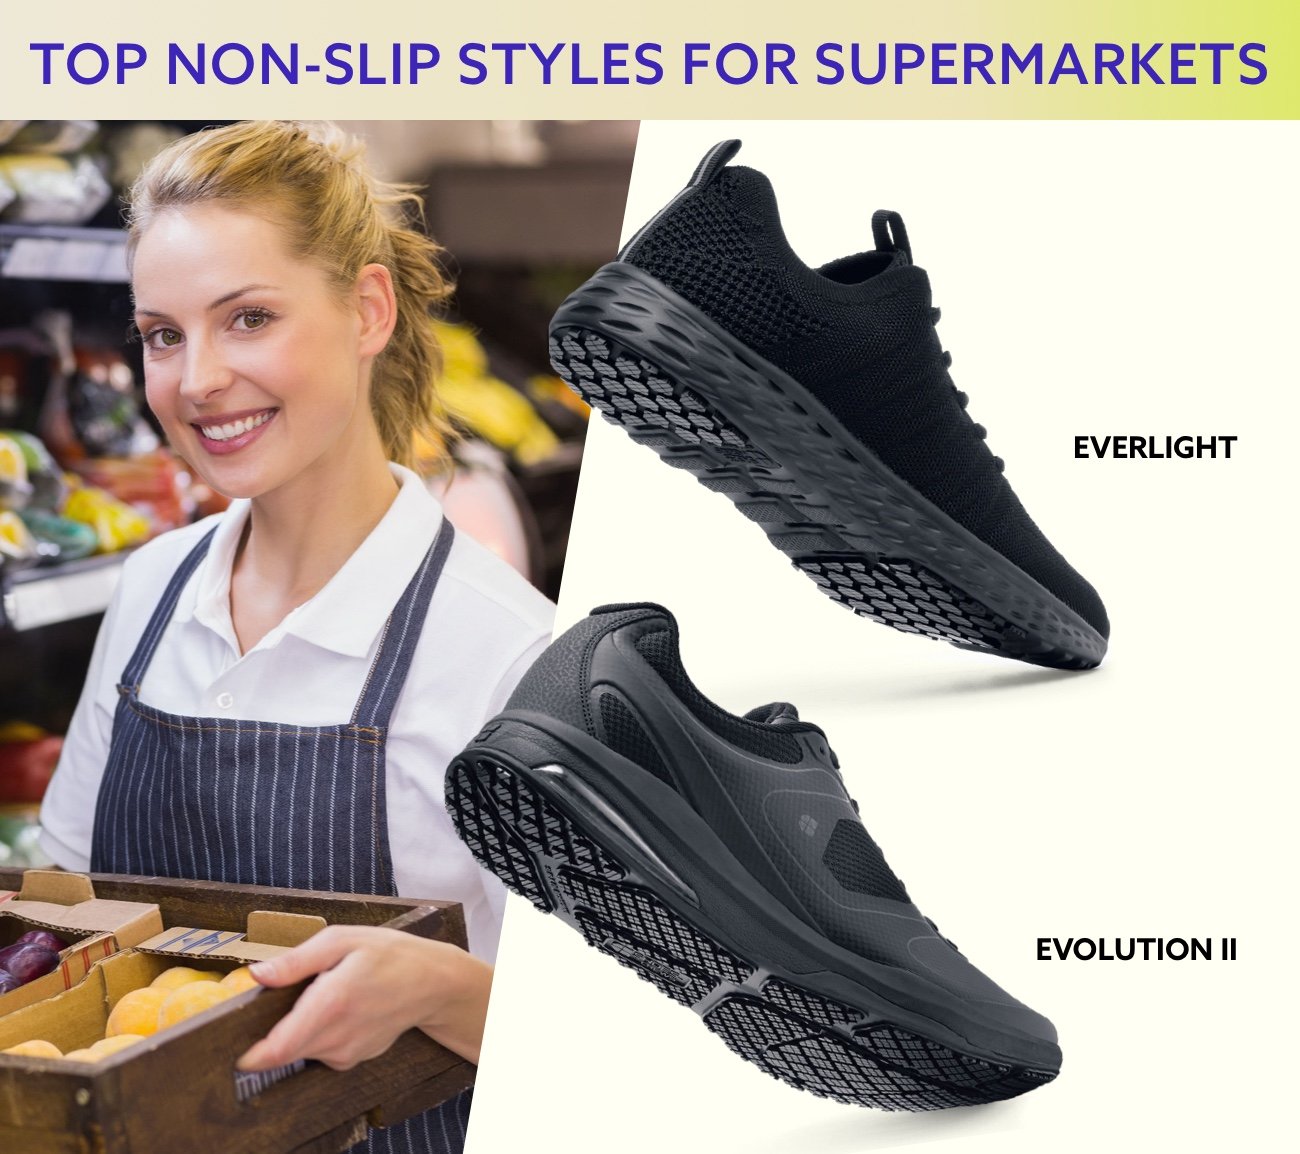 Shop Slip-Resistant Styles for Supermarkets.